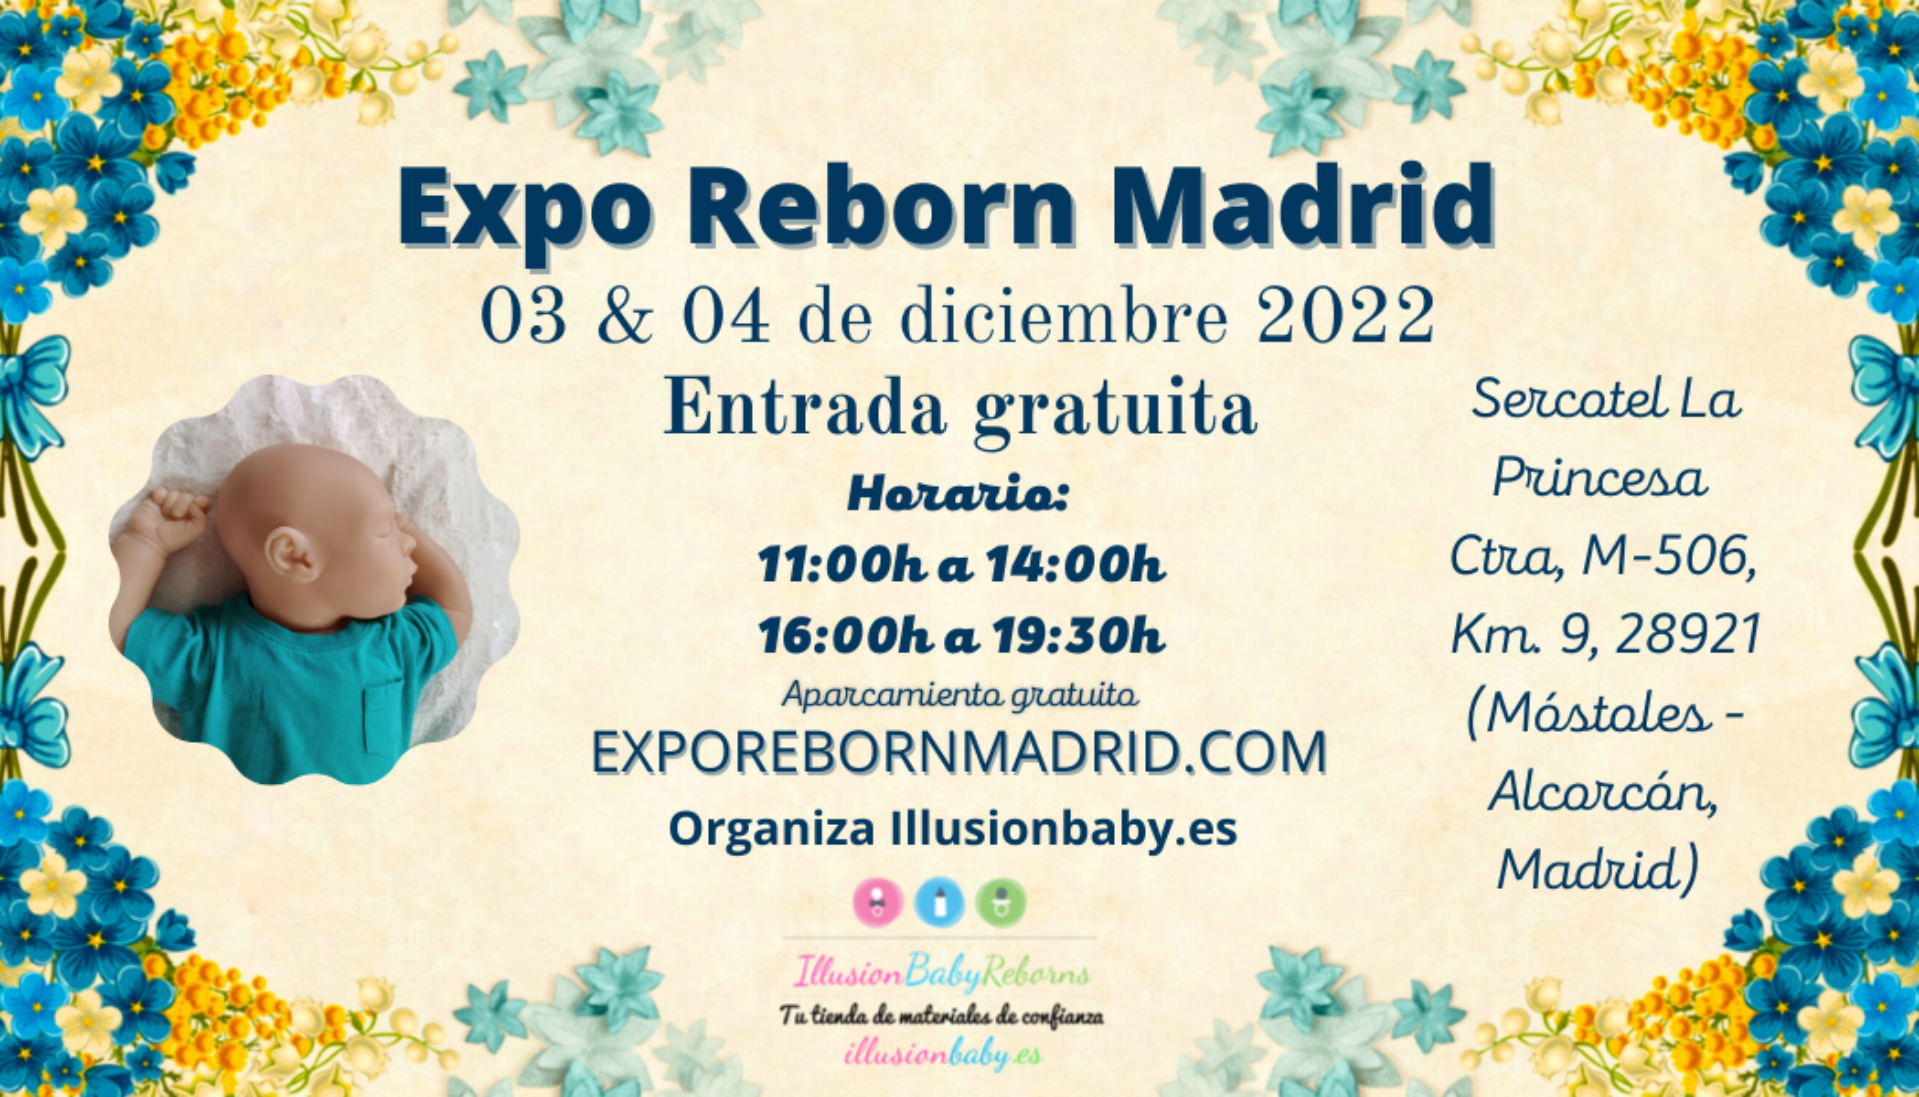 Expo Reborn Madrid